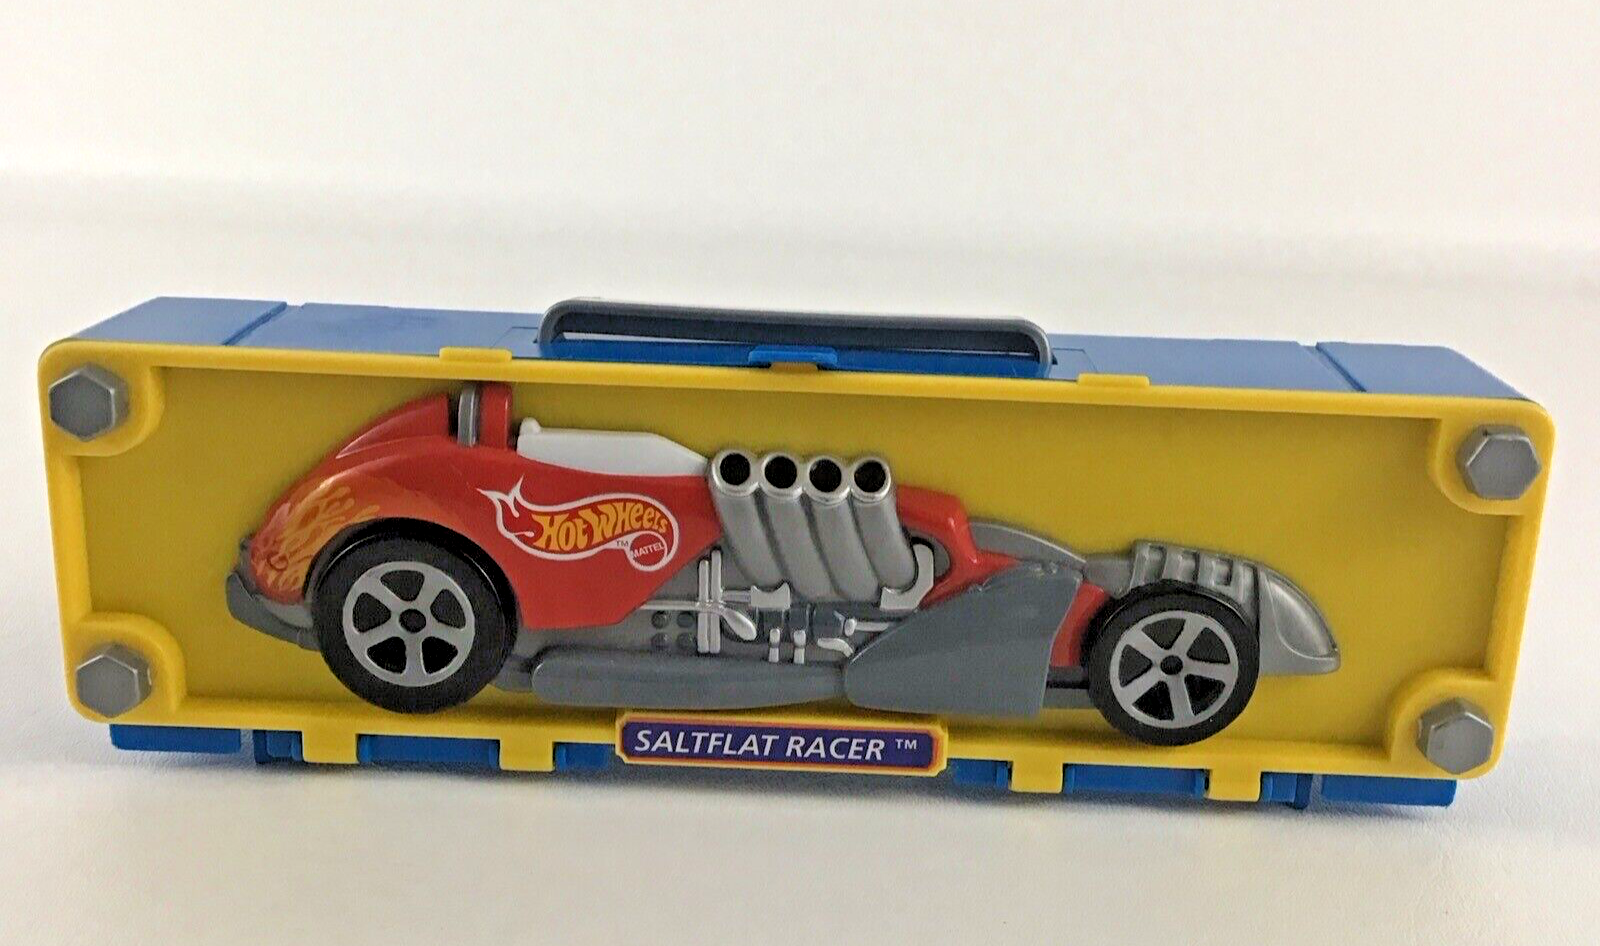 Hot Wheels Saltflat Racer Accessory Carrier Carry 6 Car Case Vintage Mattel 1998 - $24.70